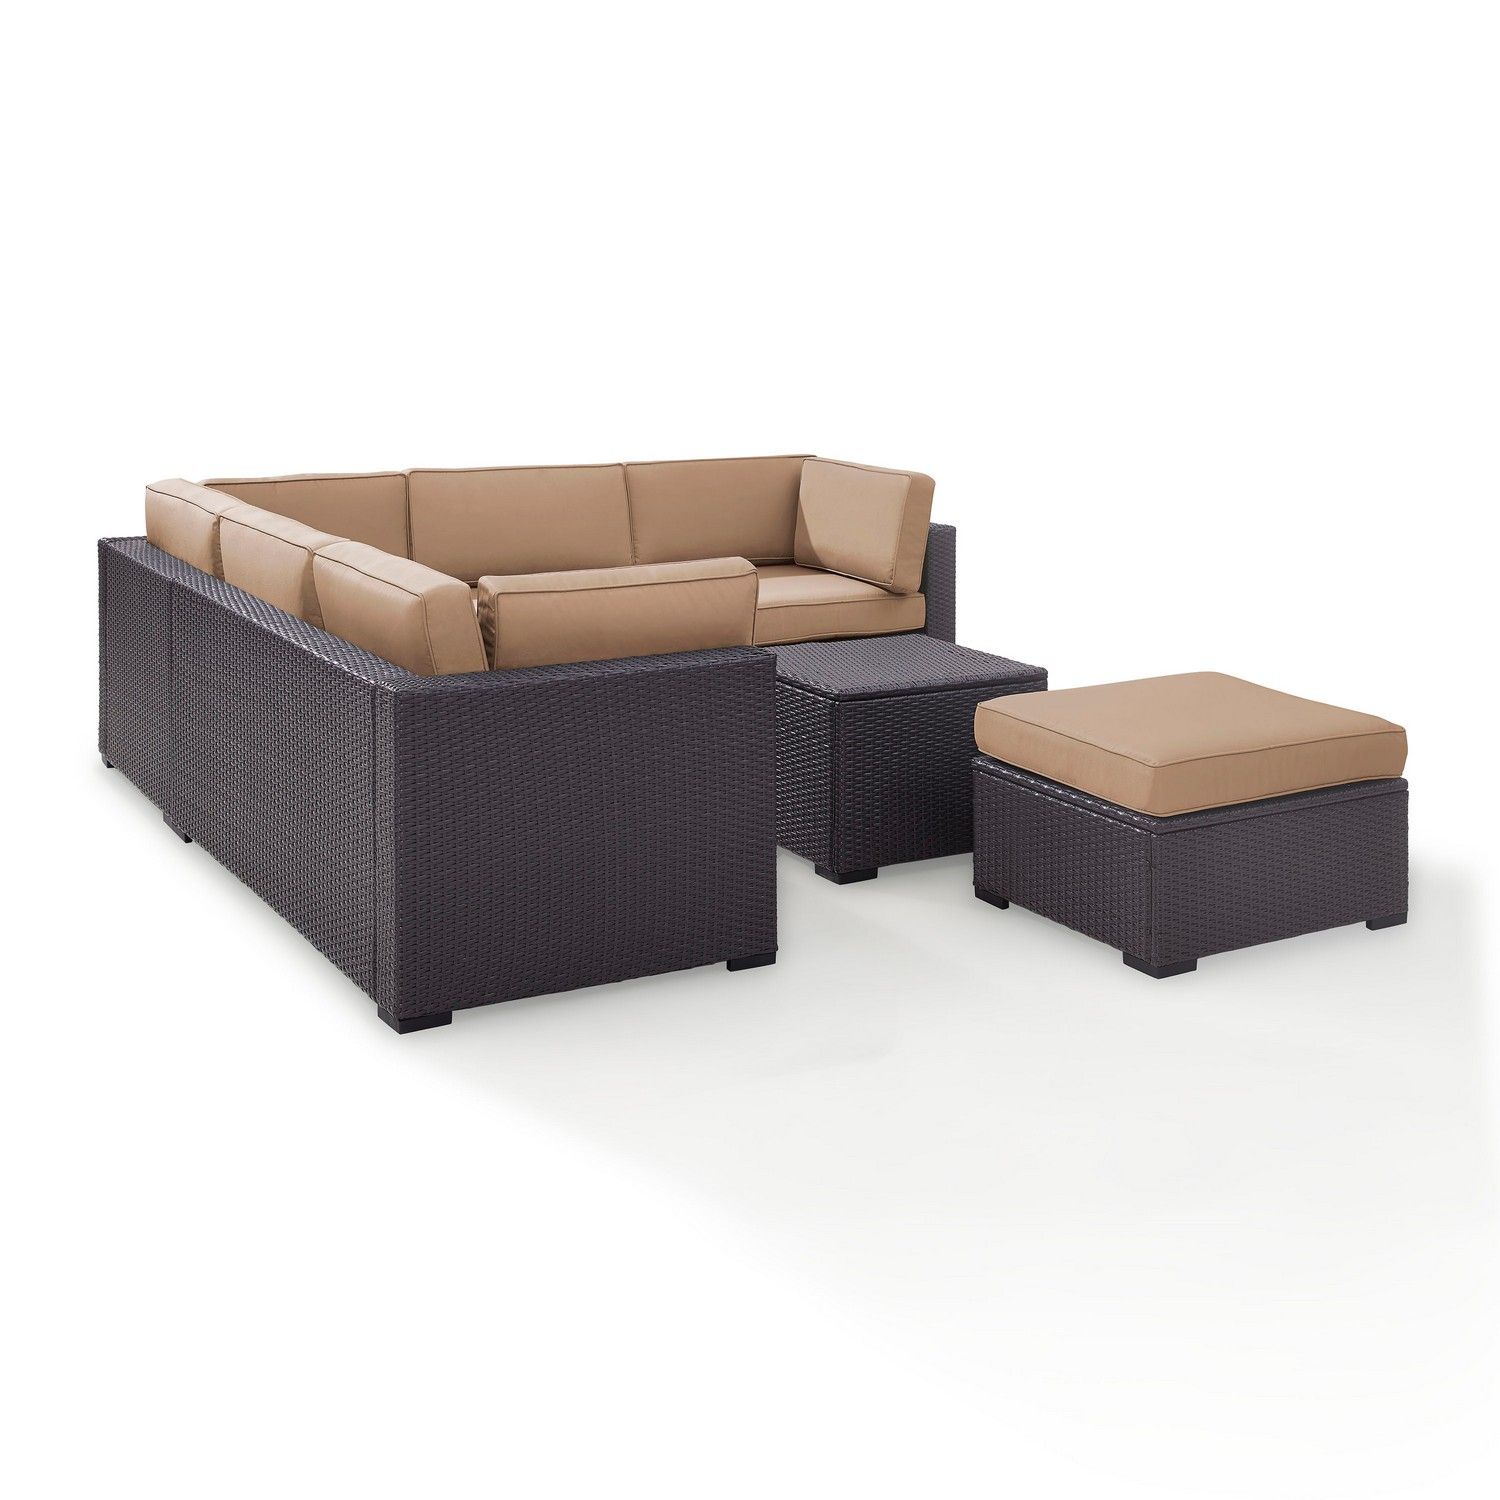 Crosley Biscayne 5-PC Outdoor Wicker Sectional Set - 2 Loveseats, Corner Chair, Coffee Table, Ottoman - Mocha/Brown